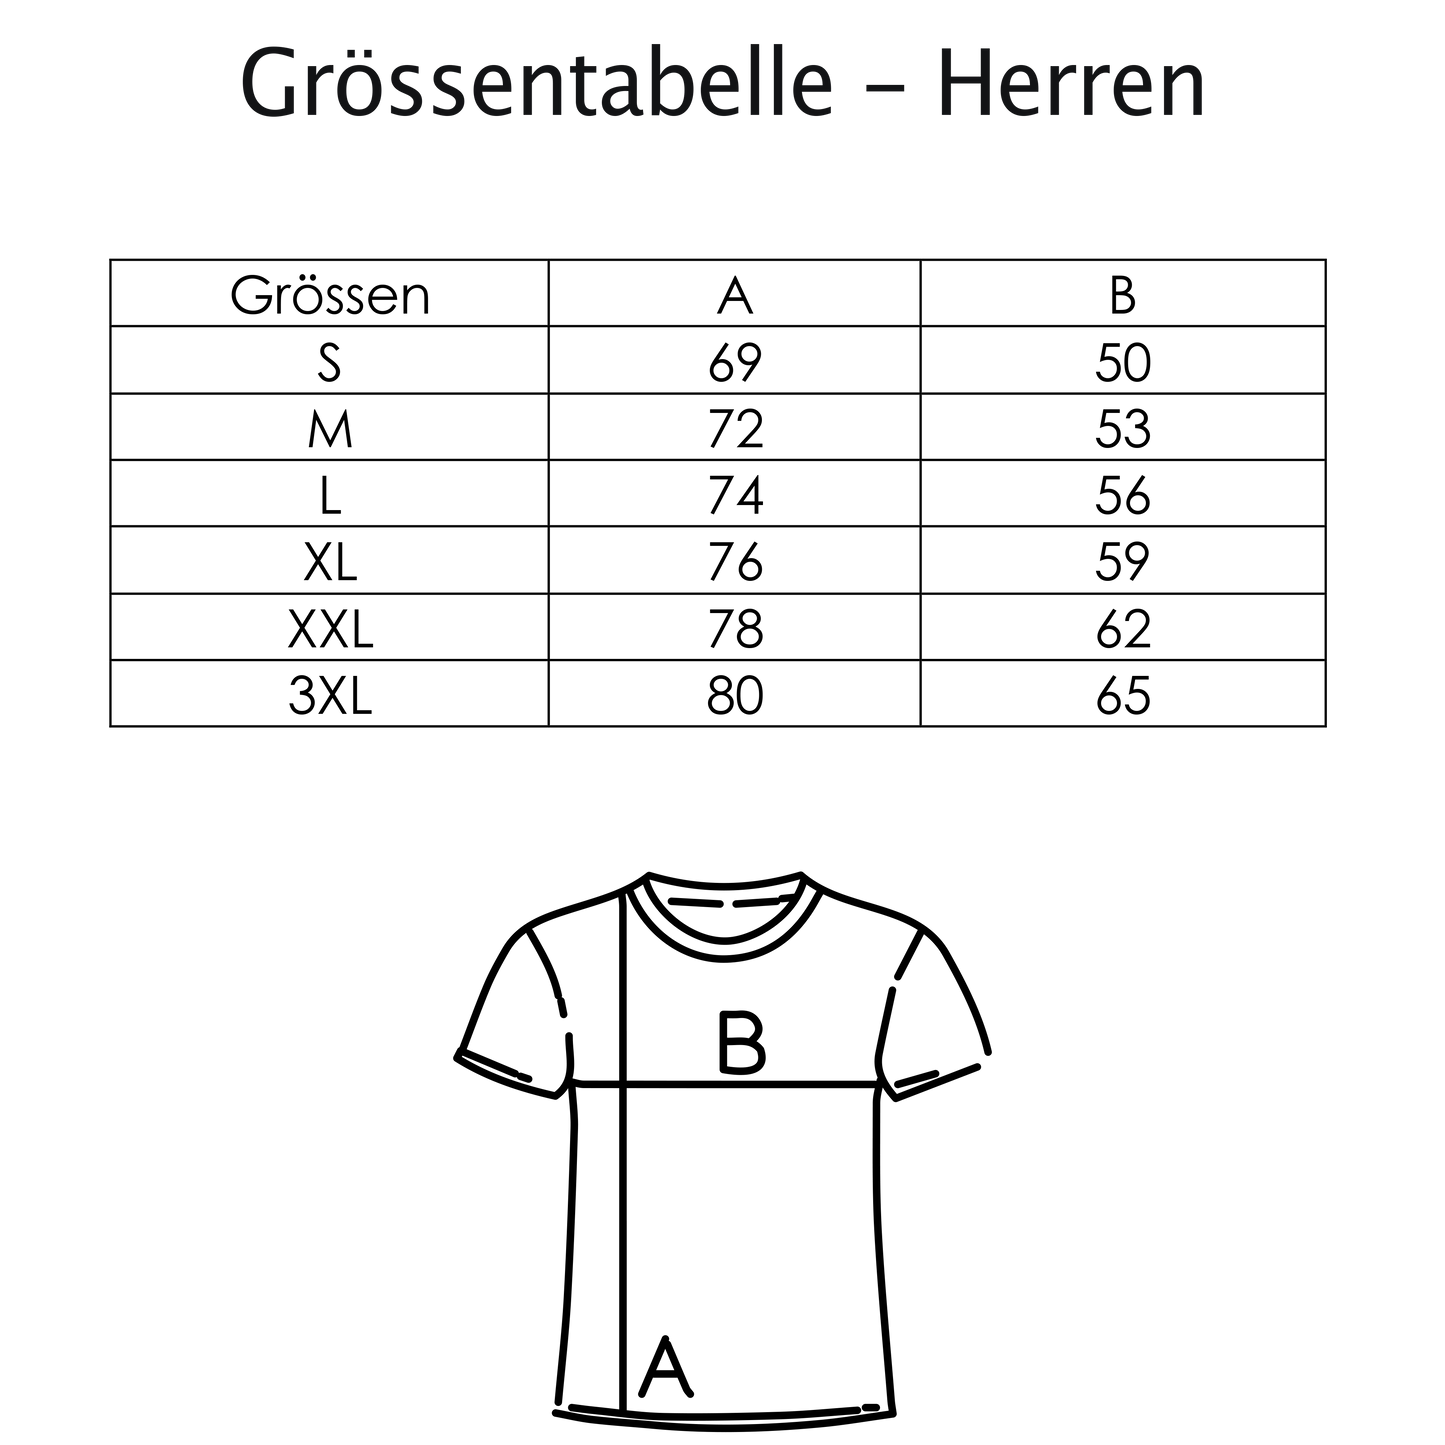 Thomas Anders Herren T-Shirt 'Logo'